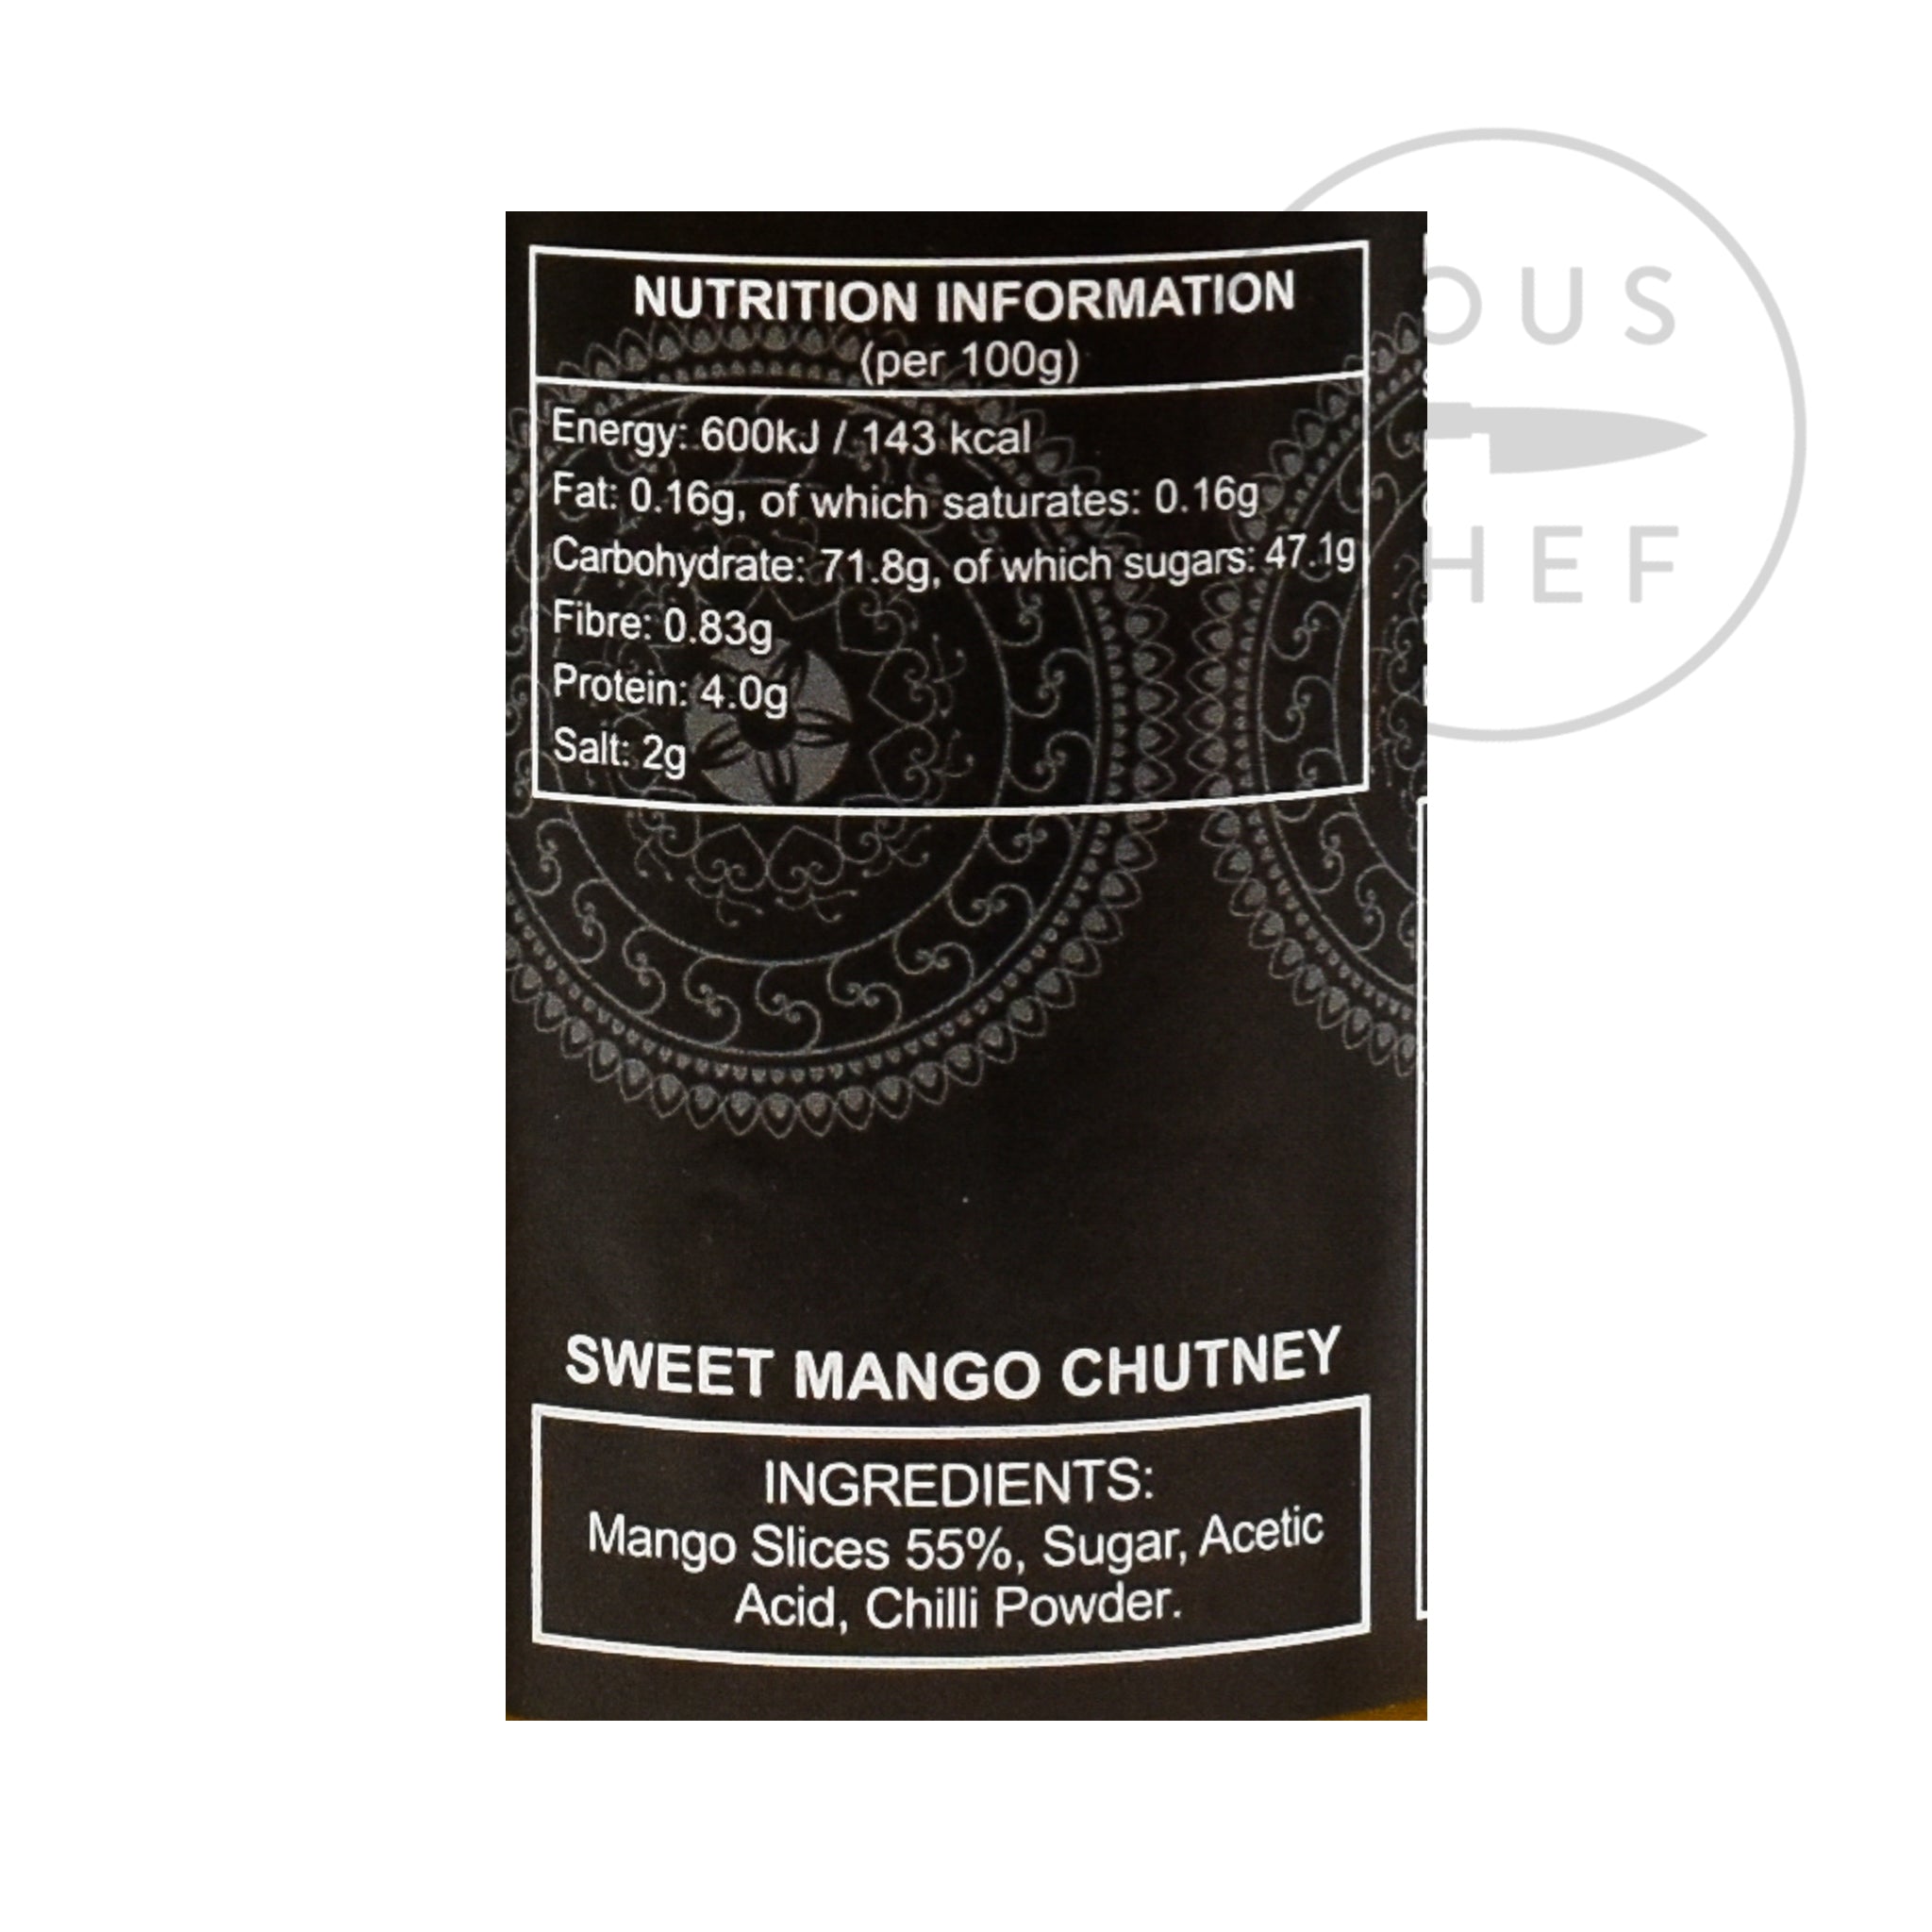 Ferns' Sweet Mango Chutney 440g nutritional information ingredients